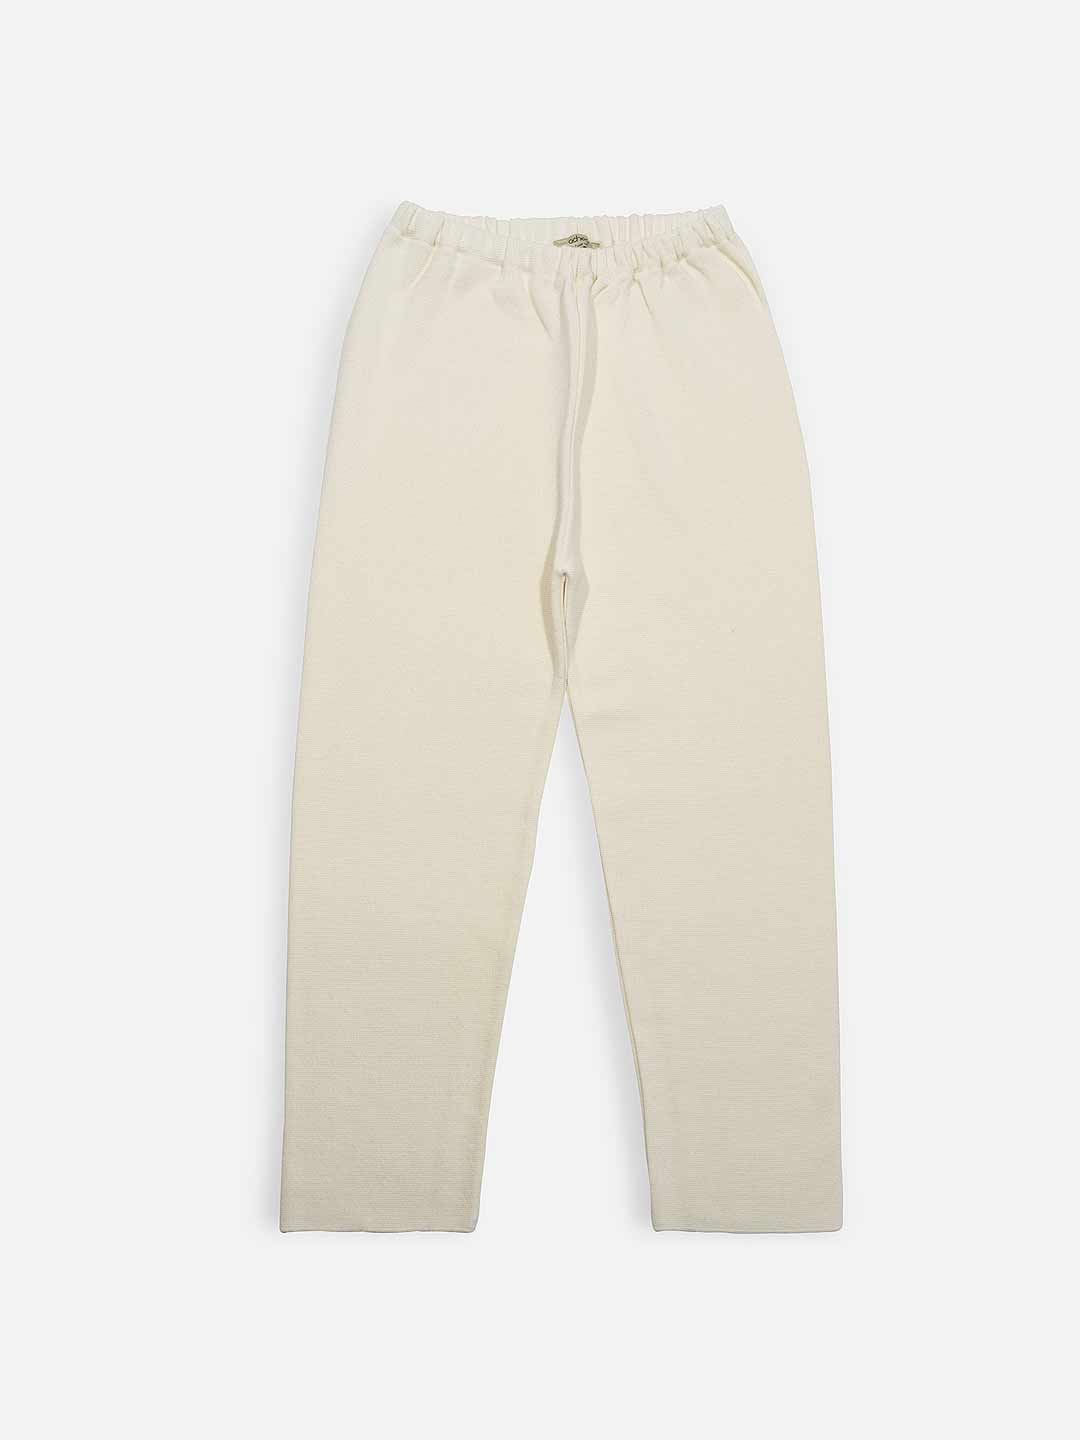 Plain Trousers with Elastic Waistband in Merino Wool